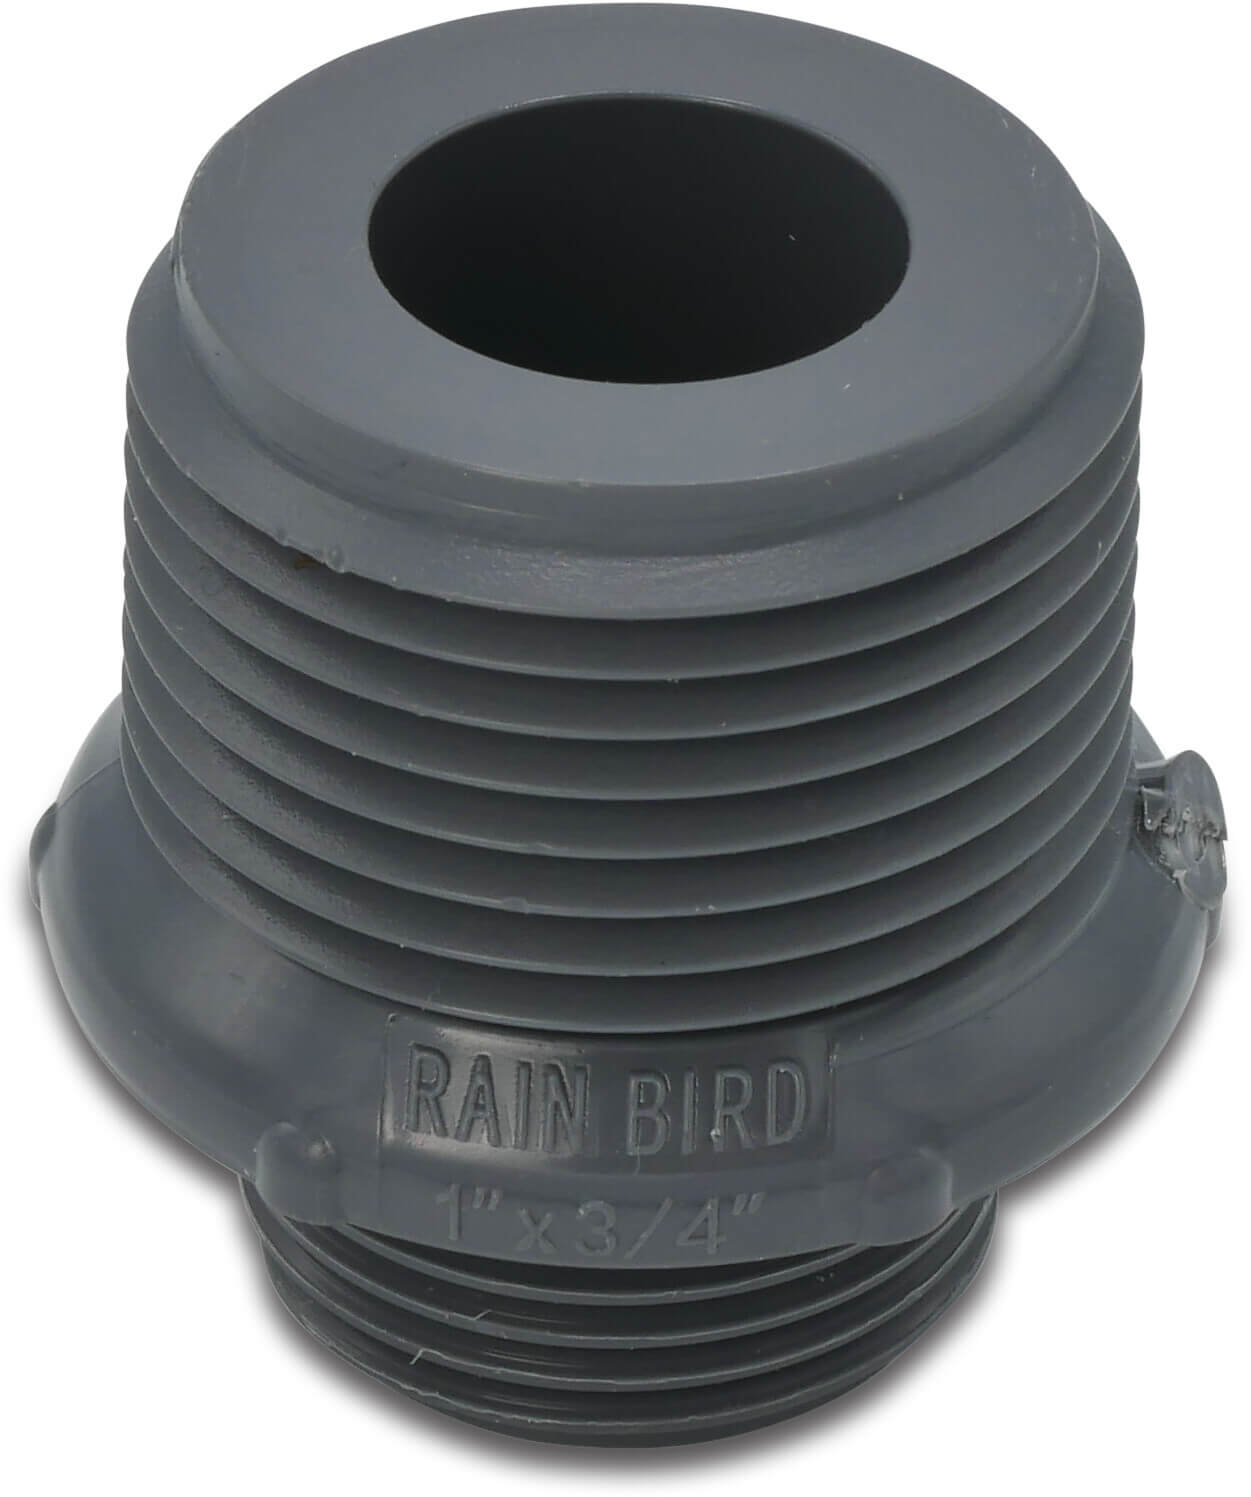 Rain Bird Union coupler PVC 1" x 3/4" male thread 10bar grey type RB1282-131